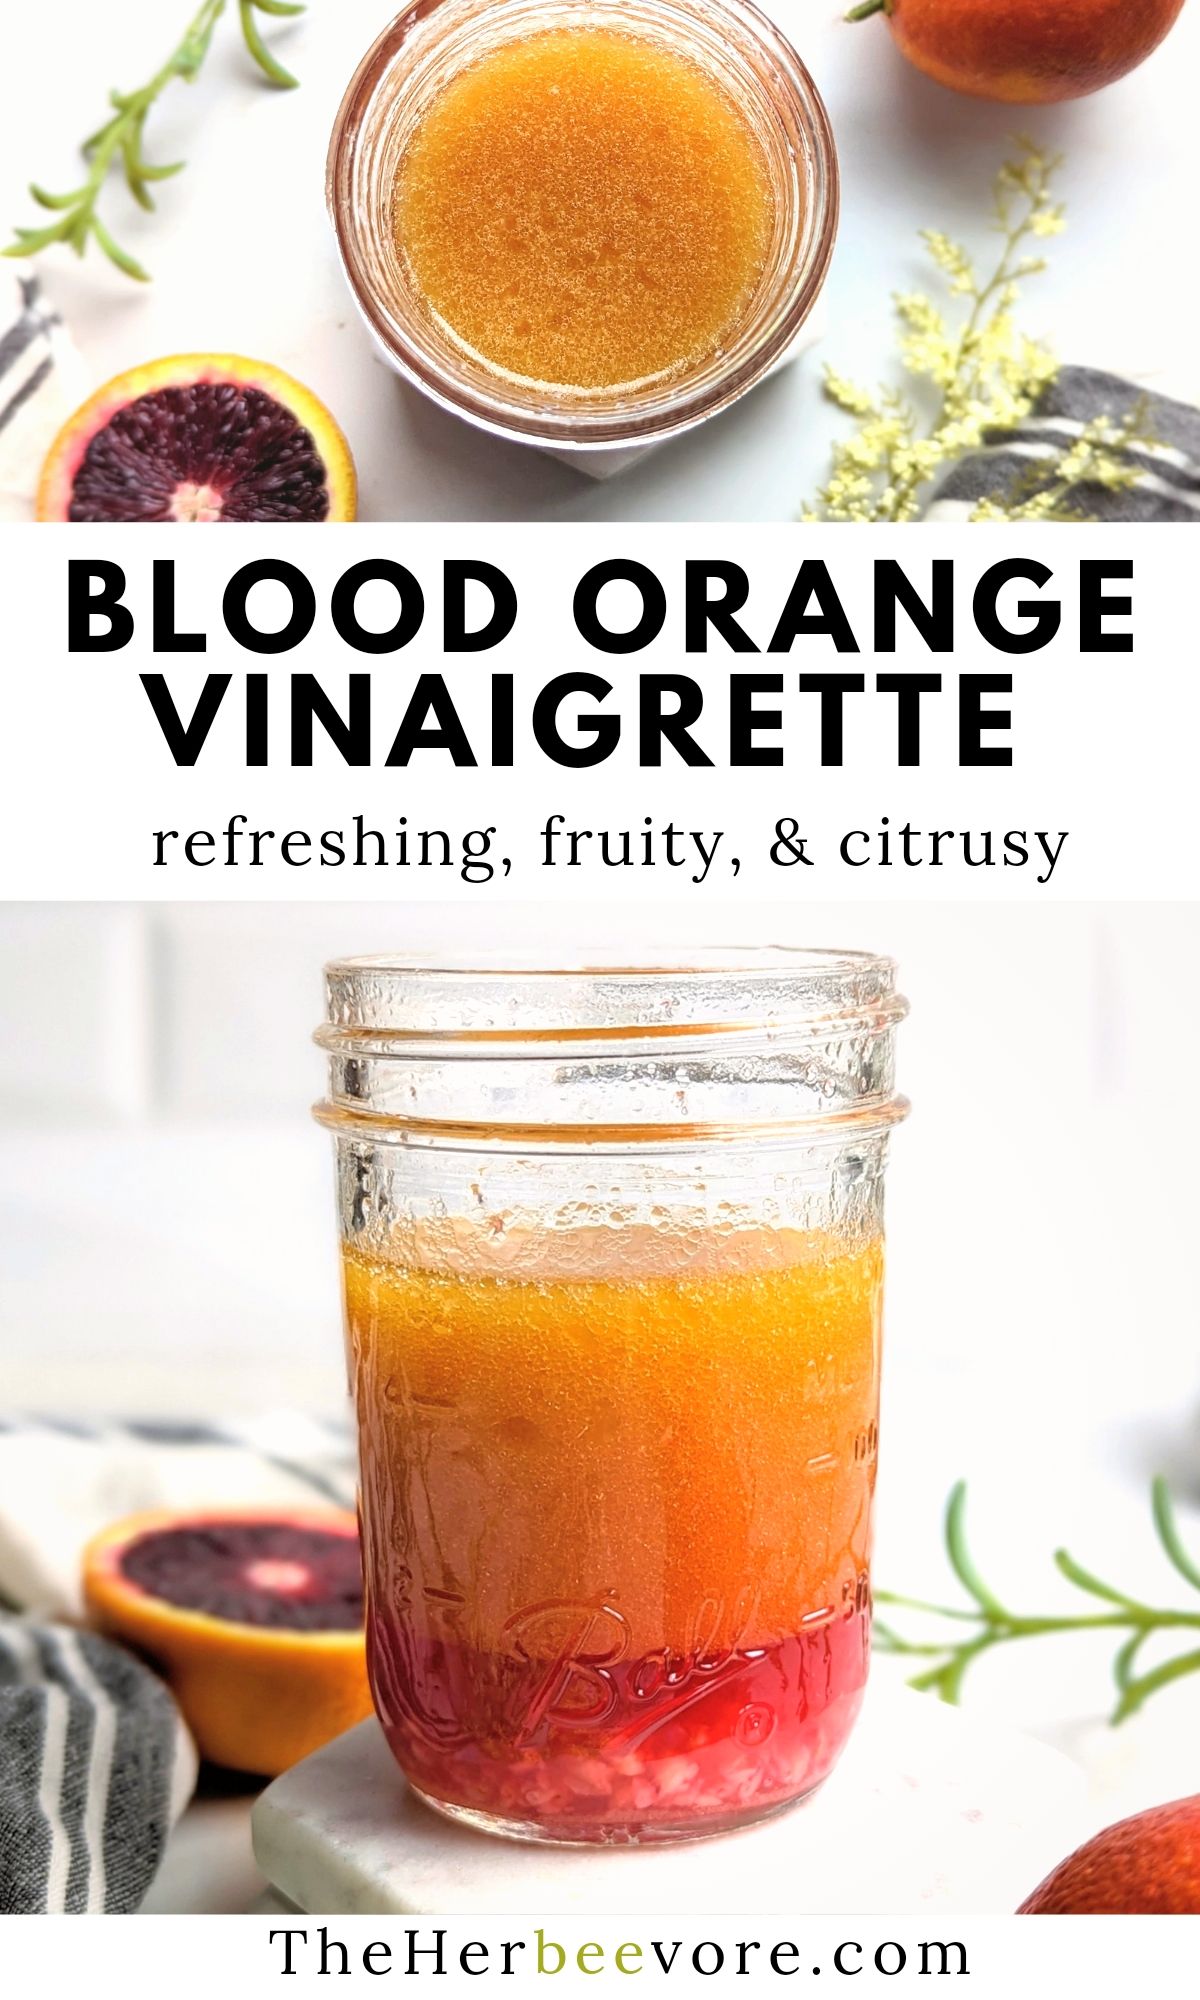 blood orange vinaigrette recipe that is fancy refreshing fruity and citrusy salad dressing with blood orange juice